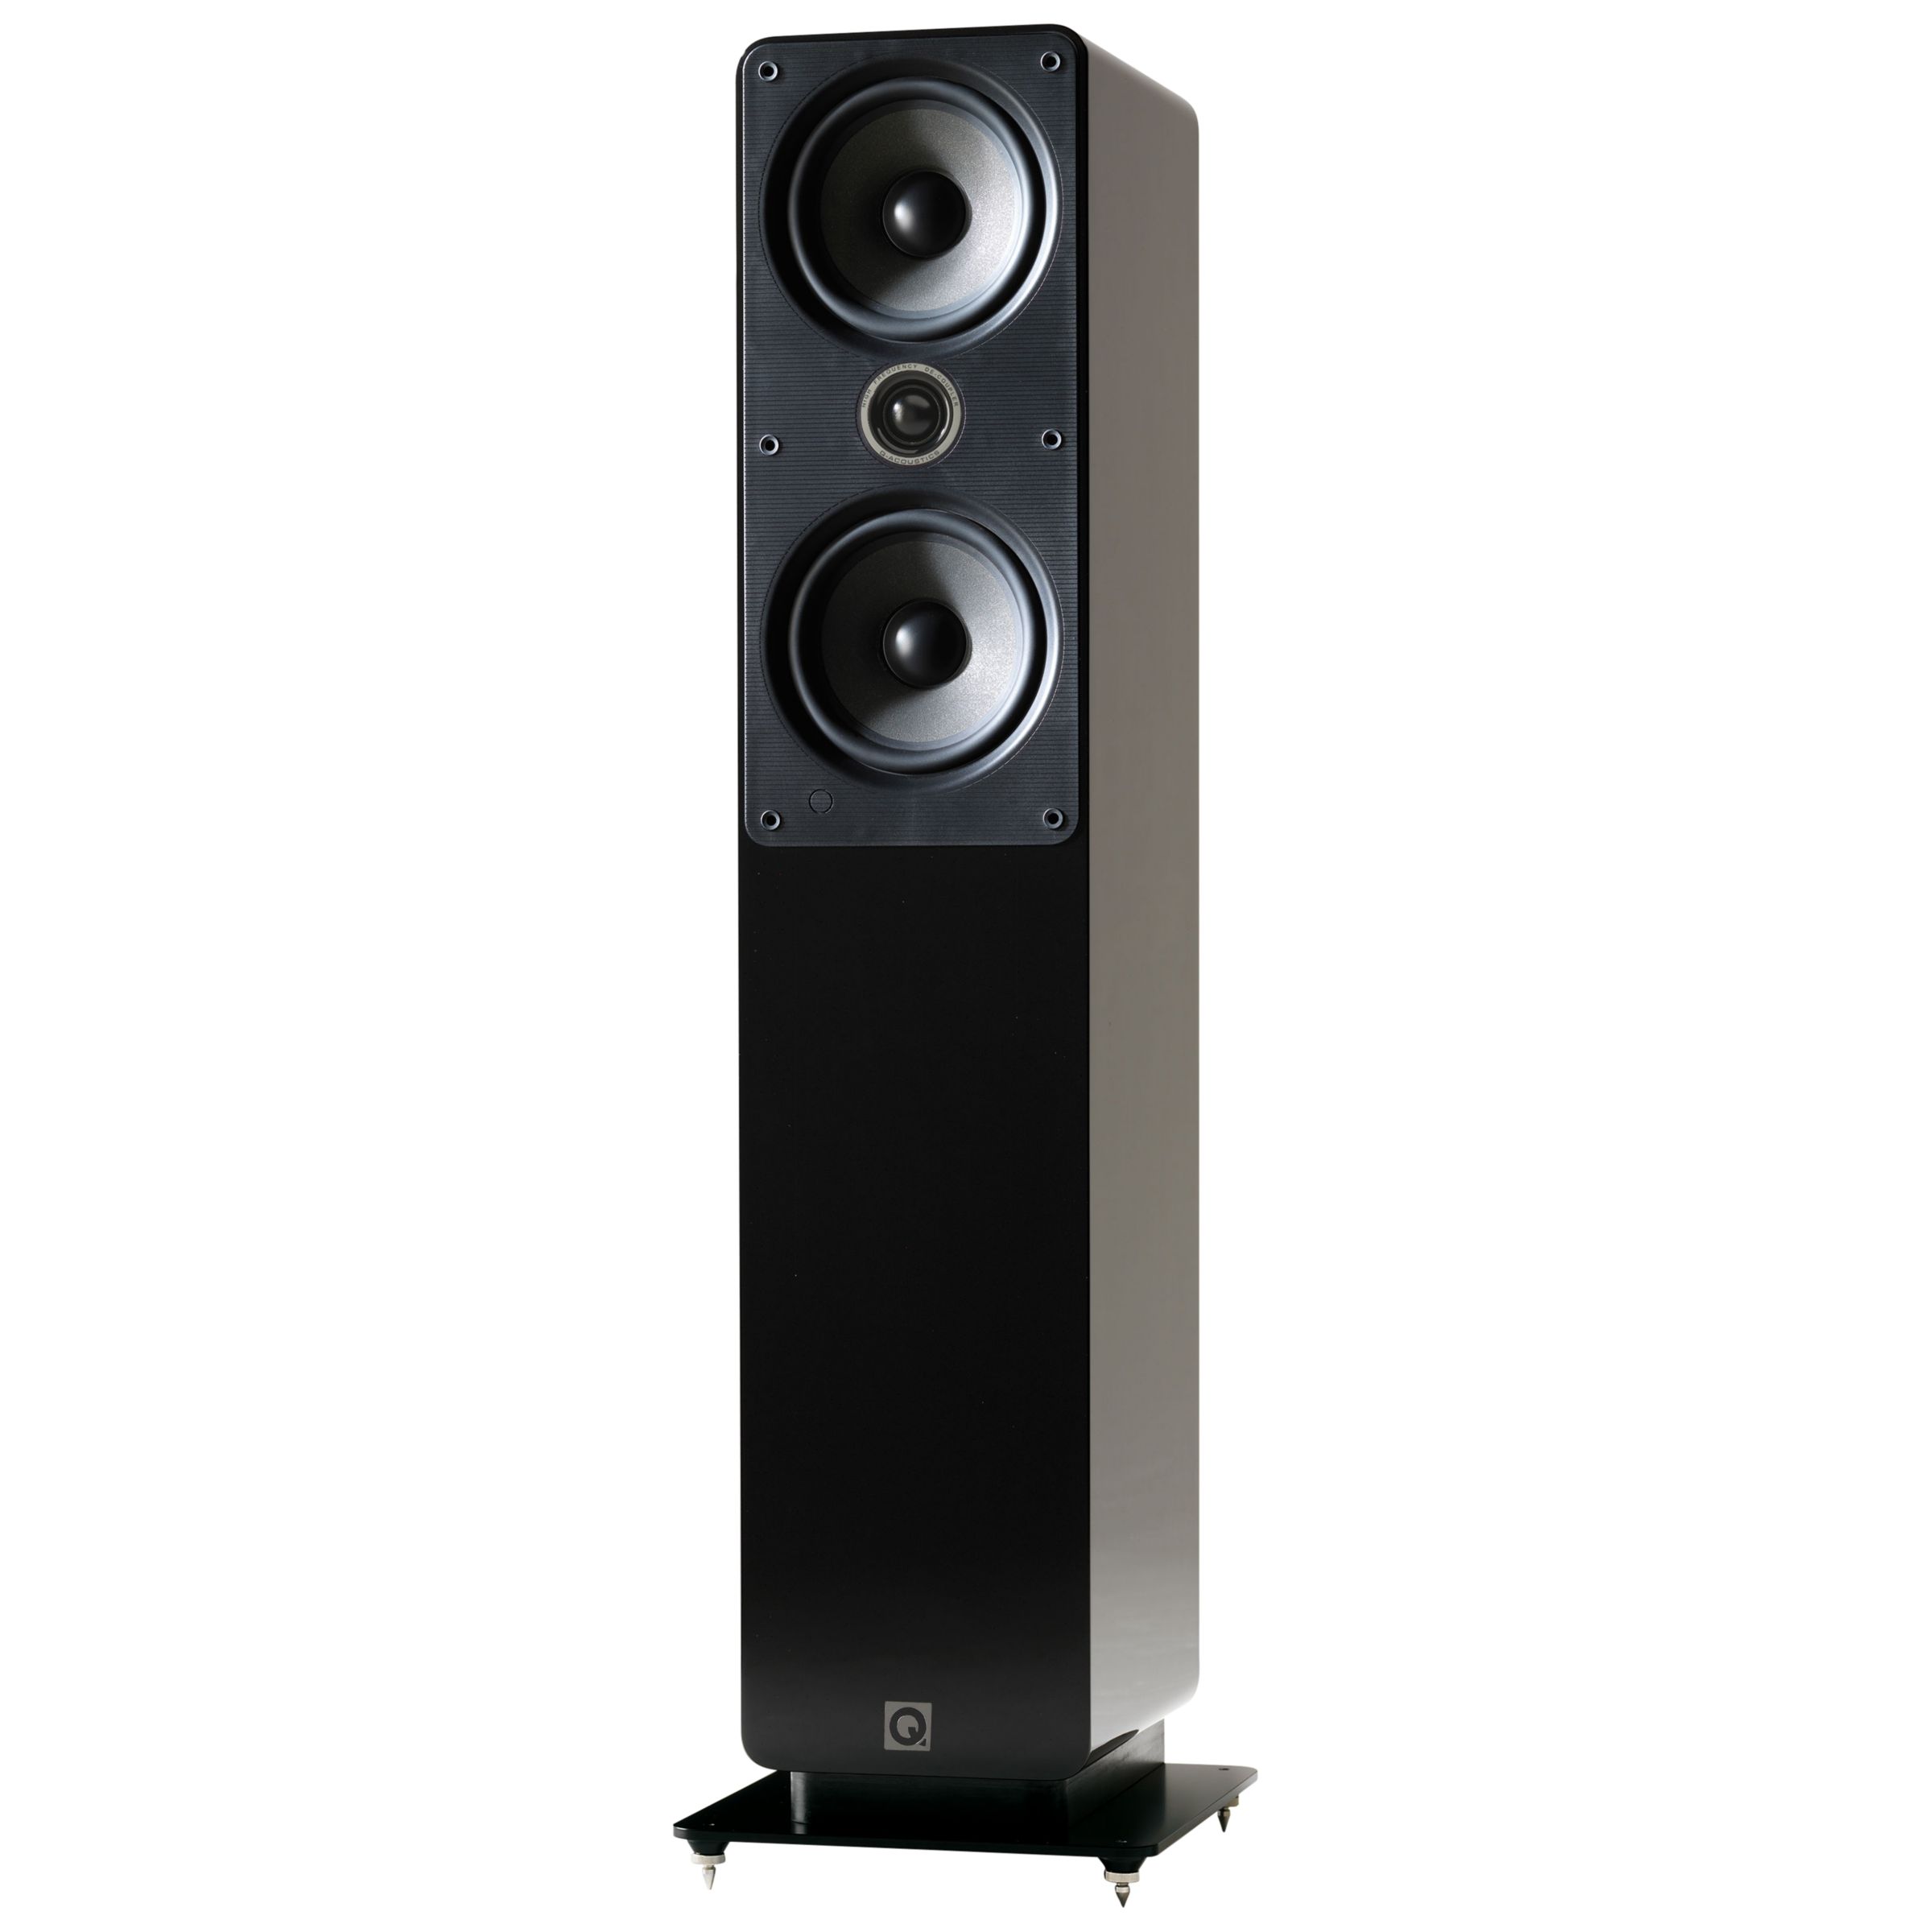 Buy Q Acoustics 2050i Floorstanding Speakers, Black Online at johnlewis.com